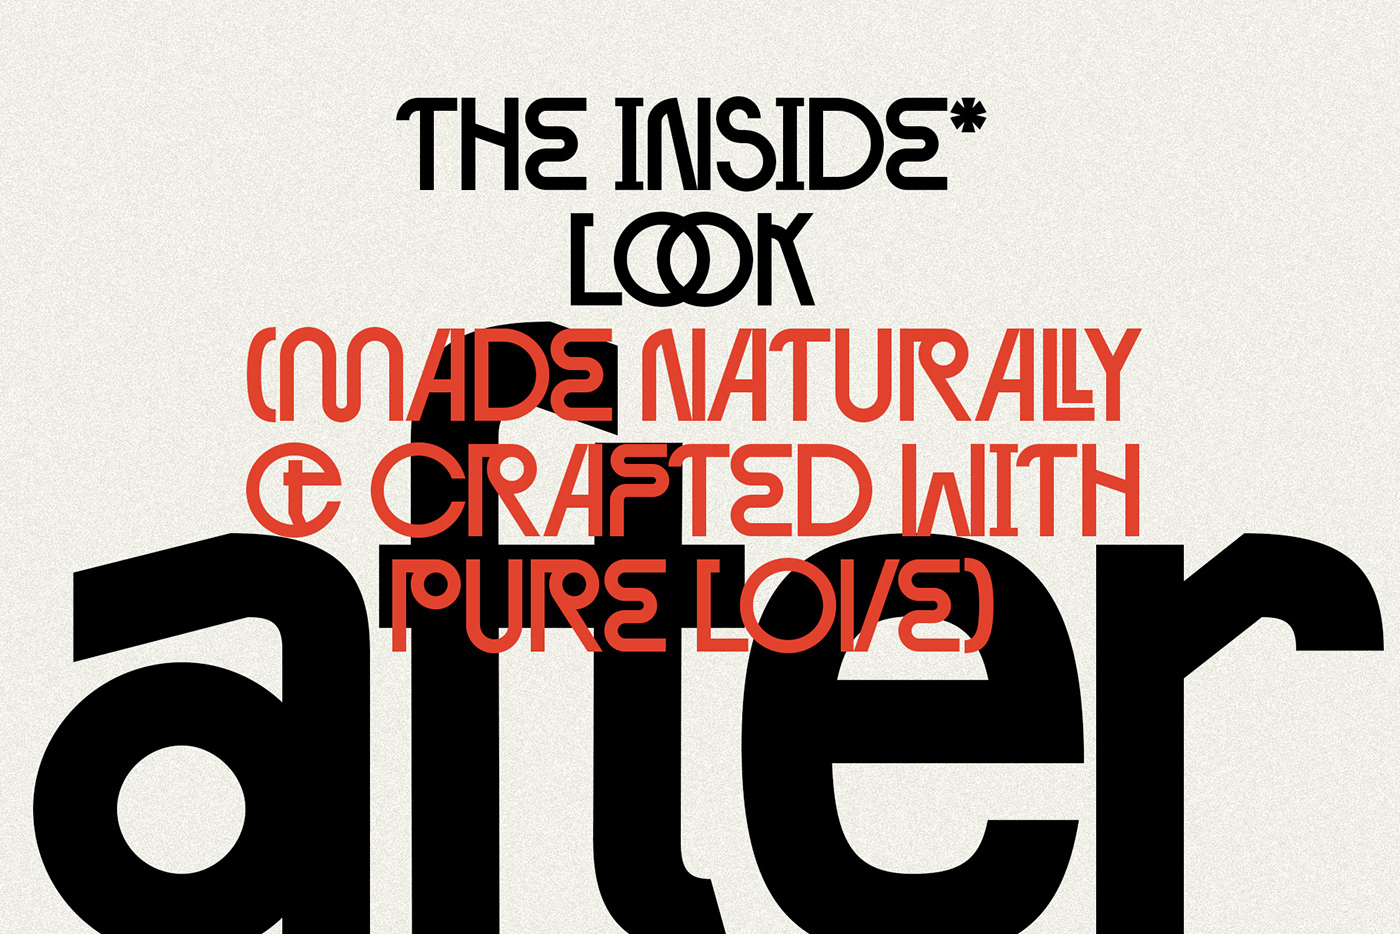 baroque geometric Typeface font elegant versatile design typography   contemporary ornament